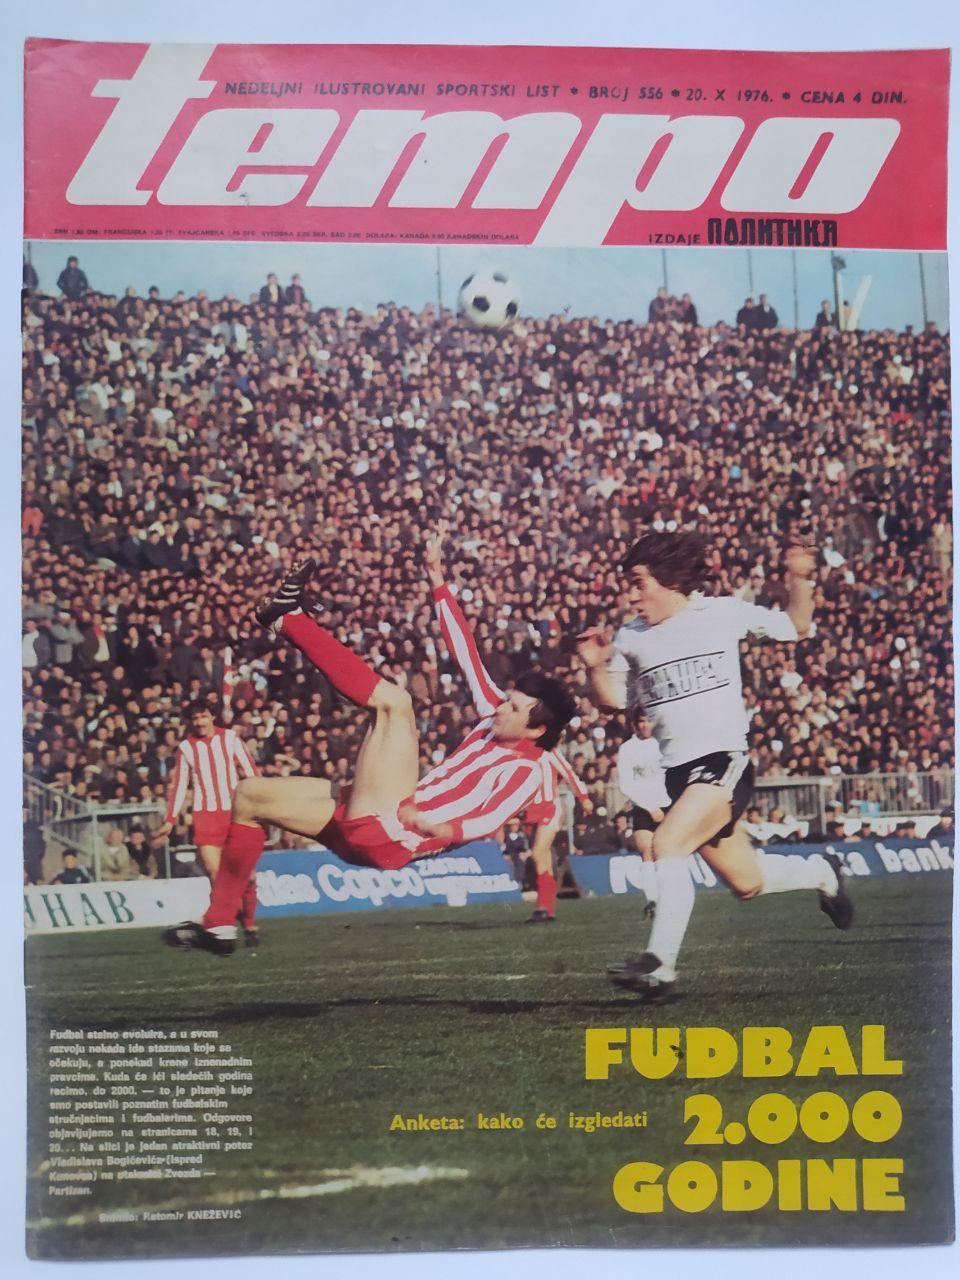 Спортивный журнал tempo Белград Югославия № 556 за 1976 год